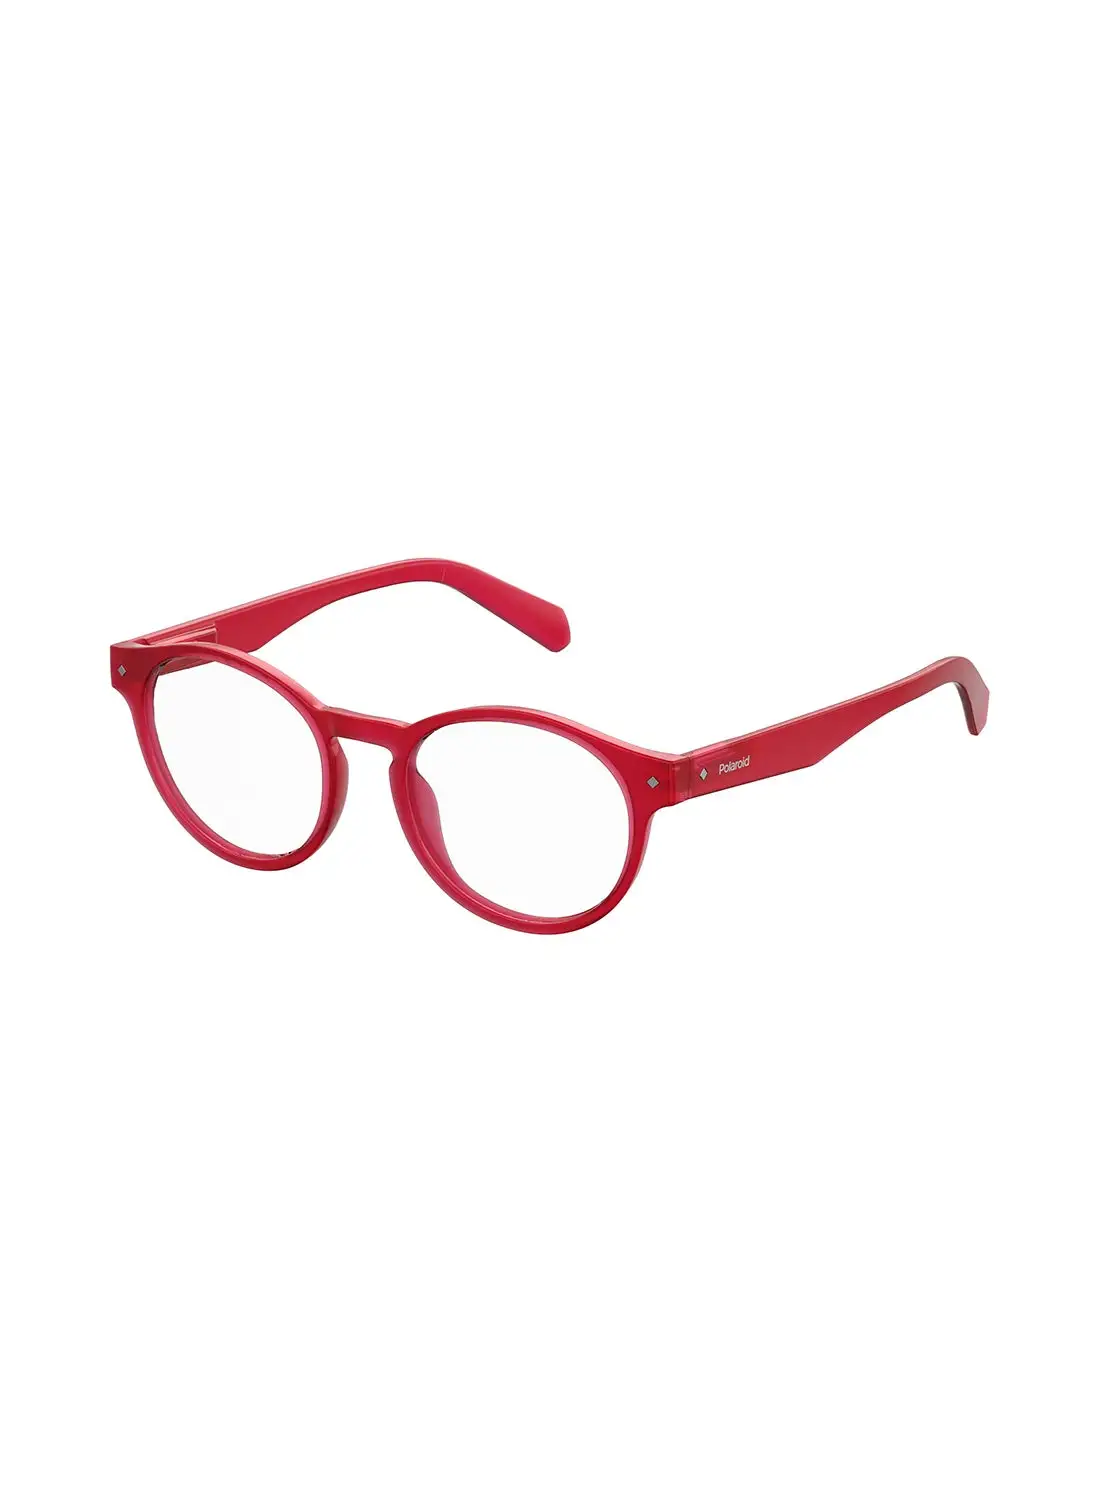 Polaroid Unisex Oval Reading Glasses - Pld 0021/R Red 49 - Lens Size: 49 Mm